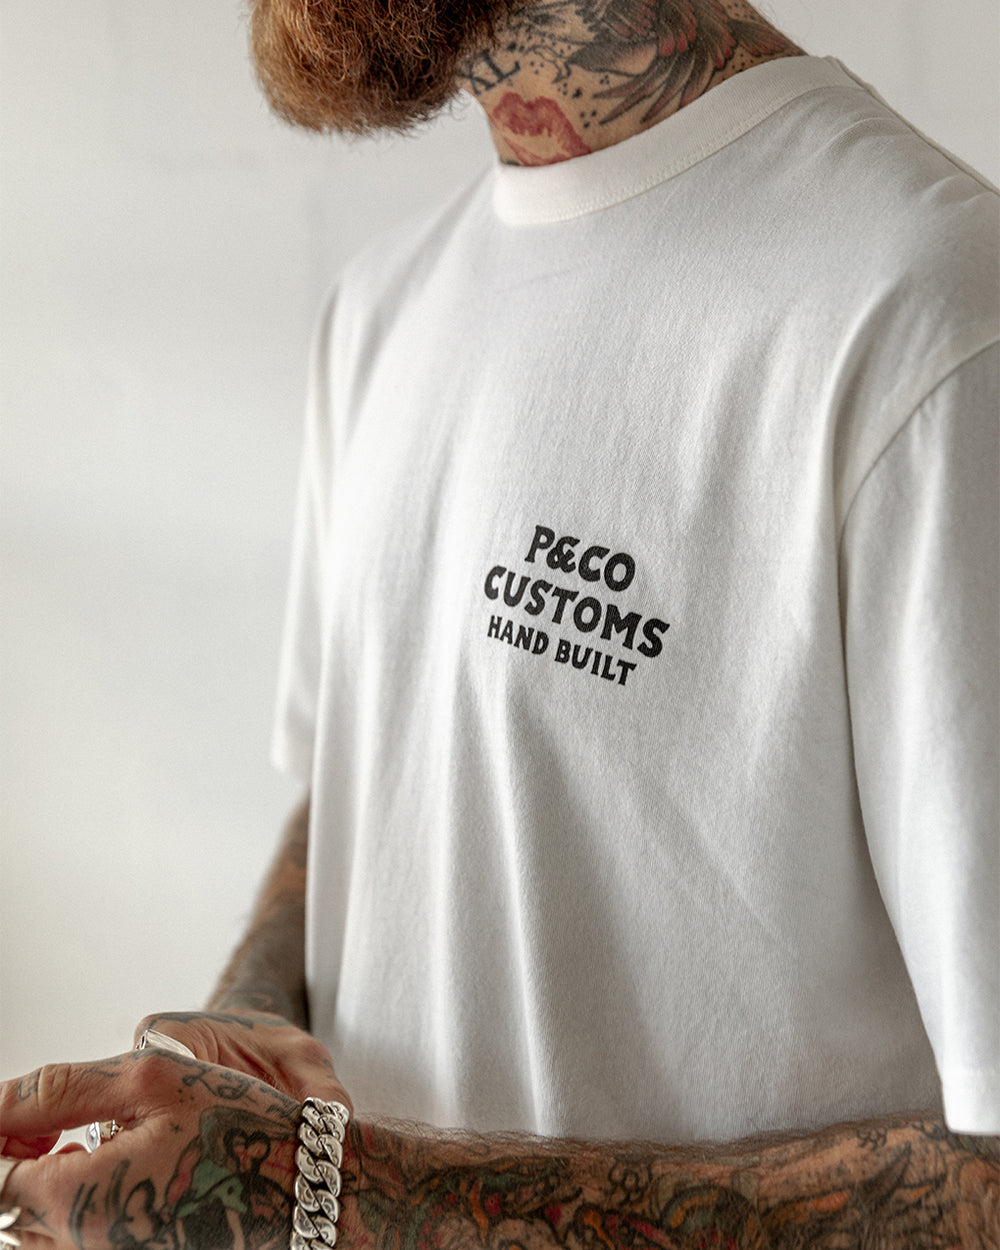 P&Co Customs T-Shirt - Off White